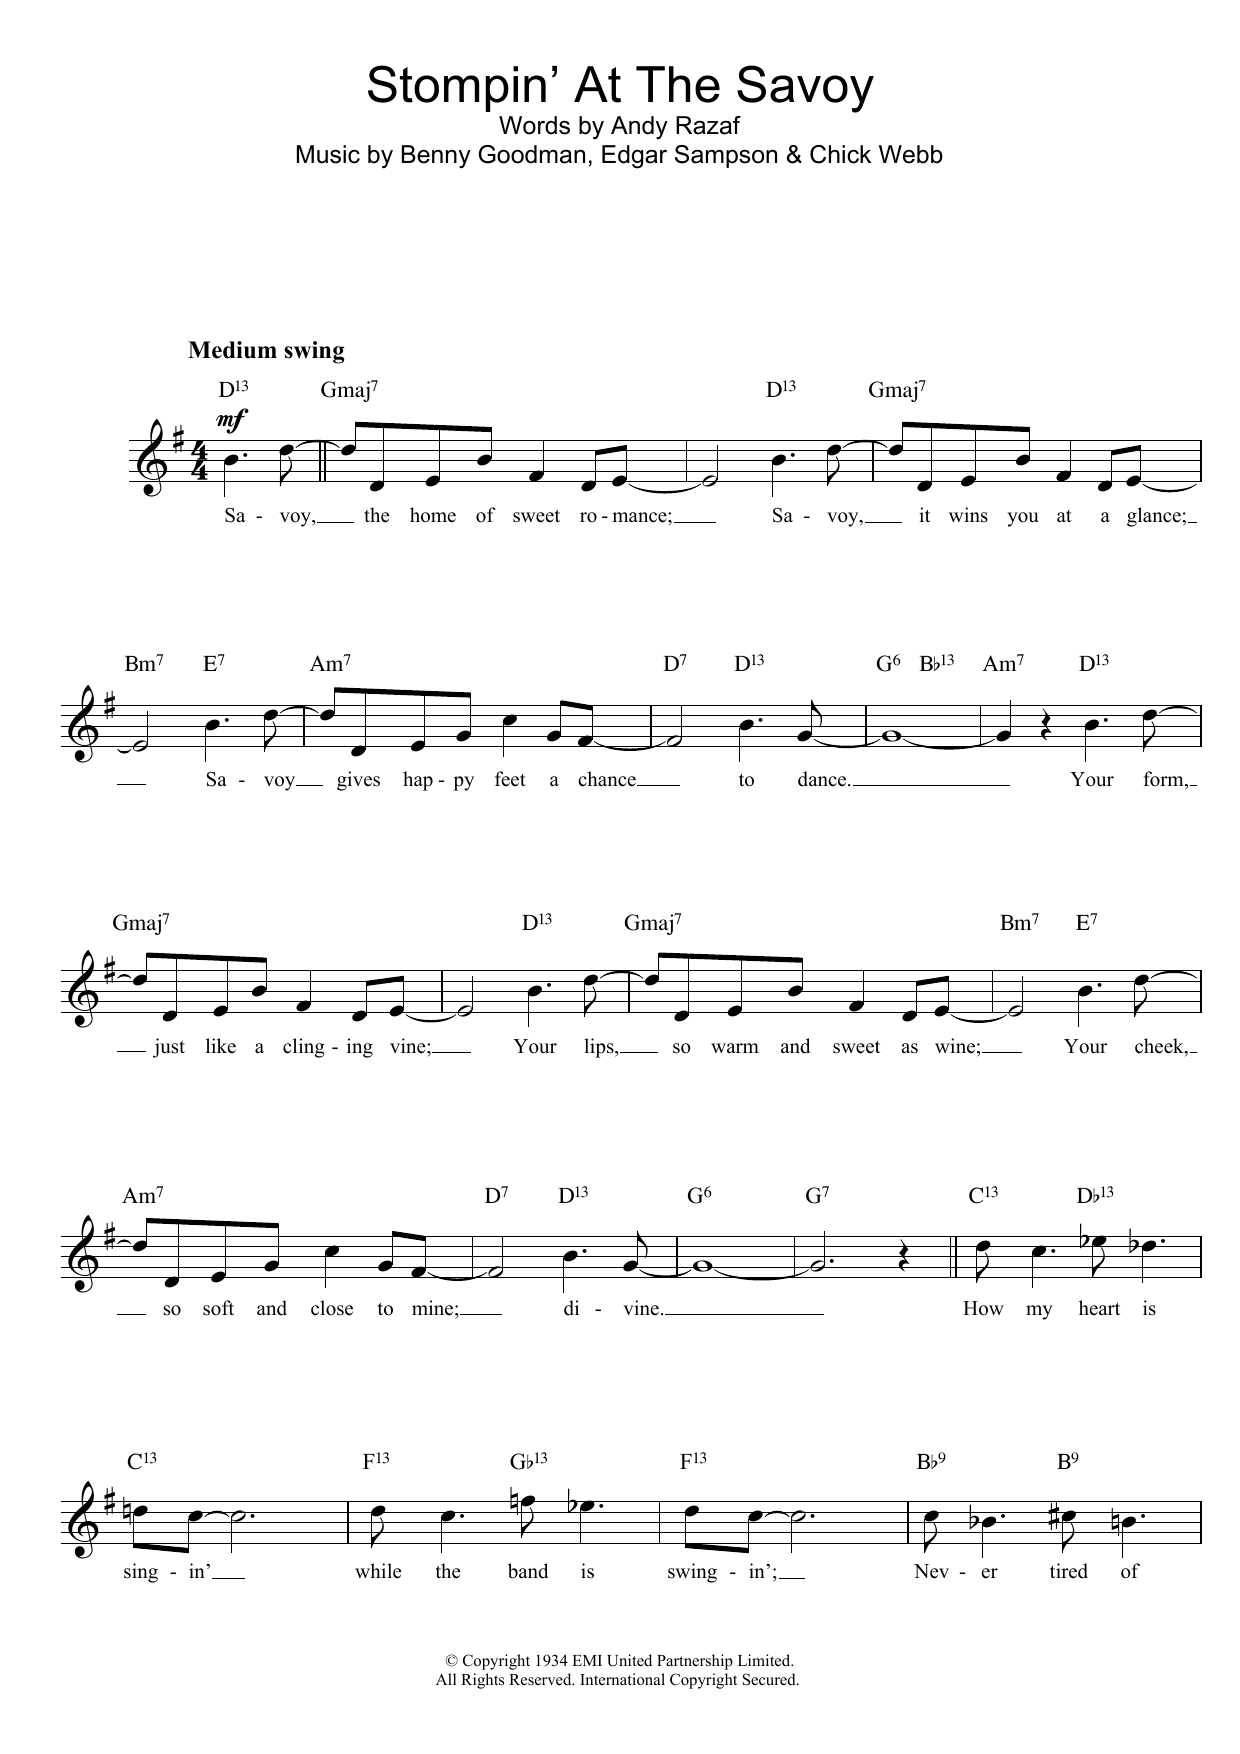 Benny Goodman Stompin' At The Savoy Sheet Music Notes & Chords for Piano - Download or Print PDF